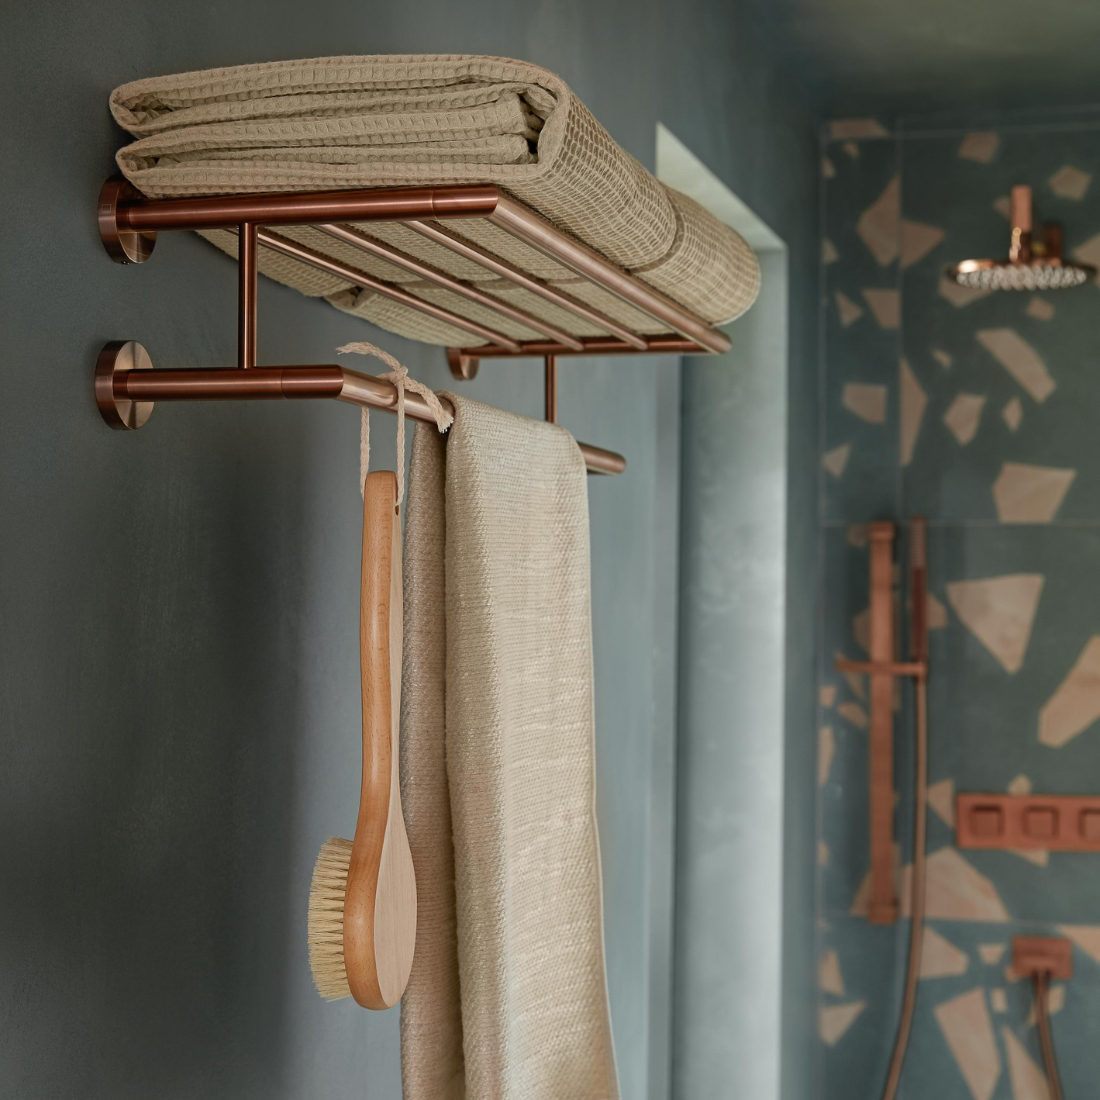 Brushed Bronze Towel Shelf with Rail